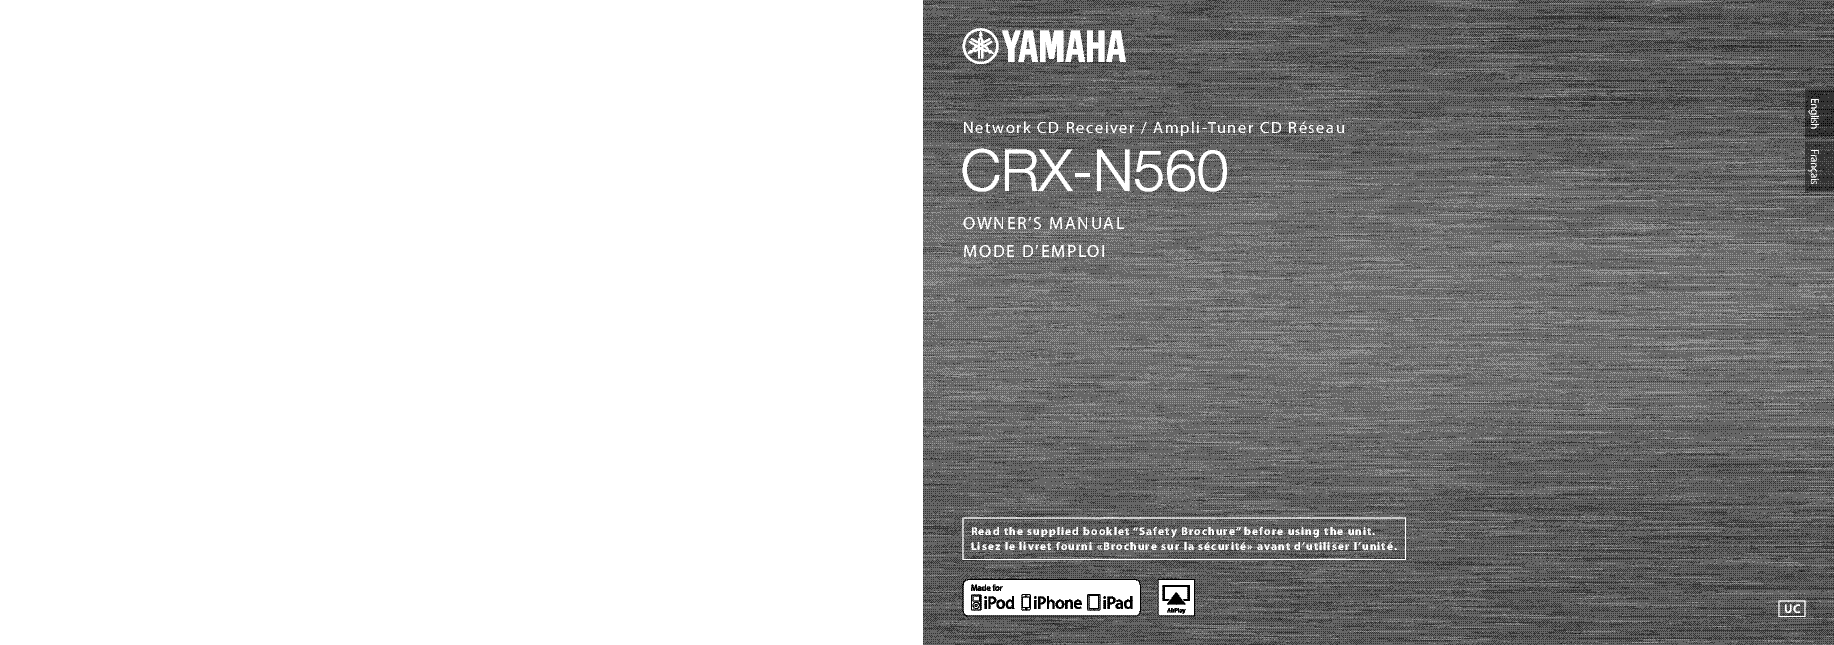 YAMAHA CRX-N560 CD PLAYER USER MANUAL Service Manual download